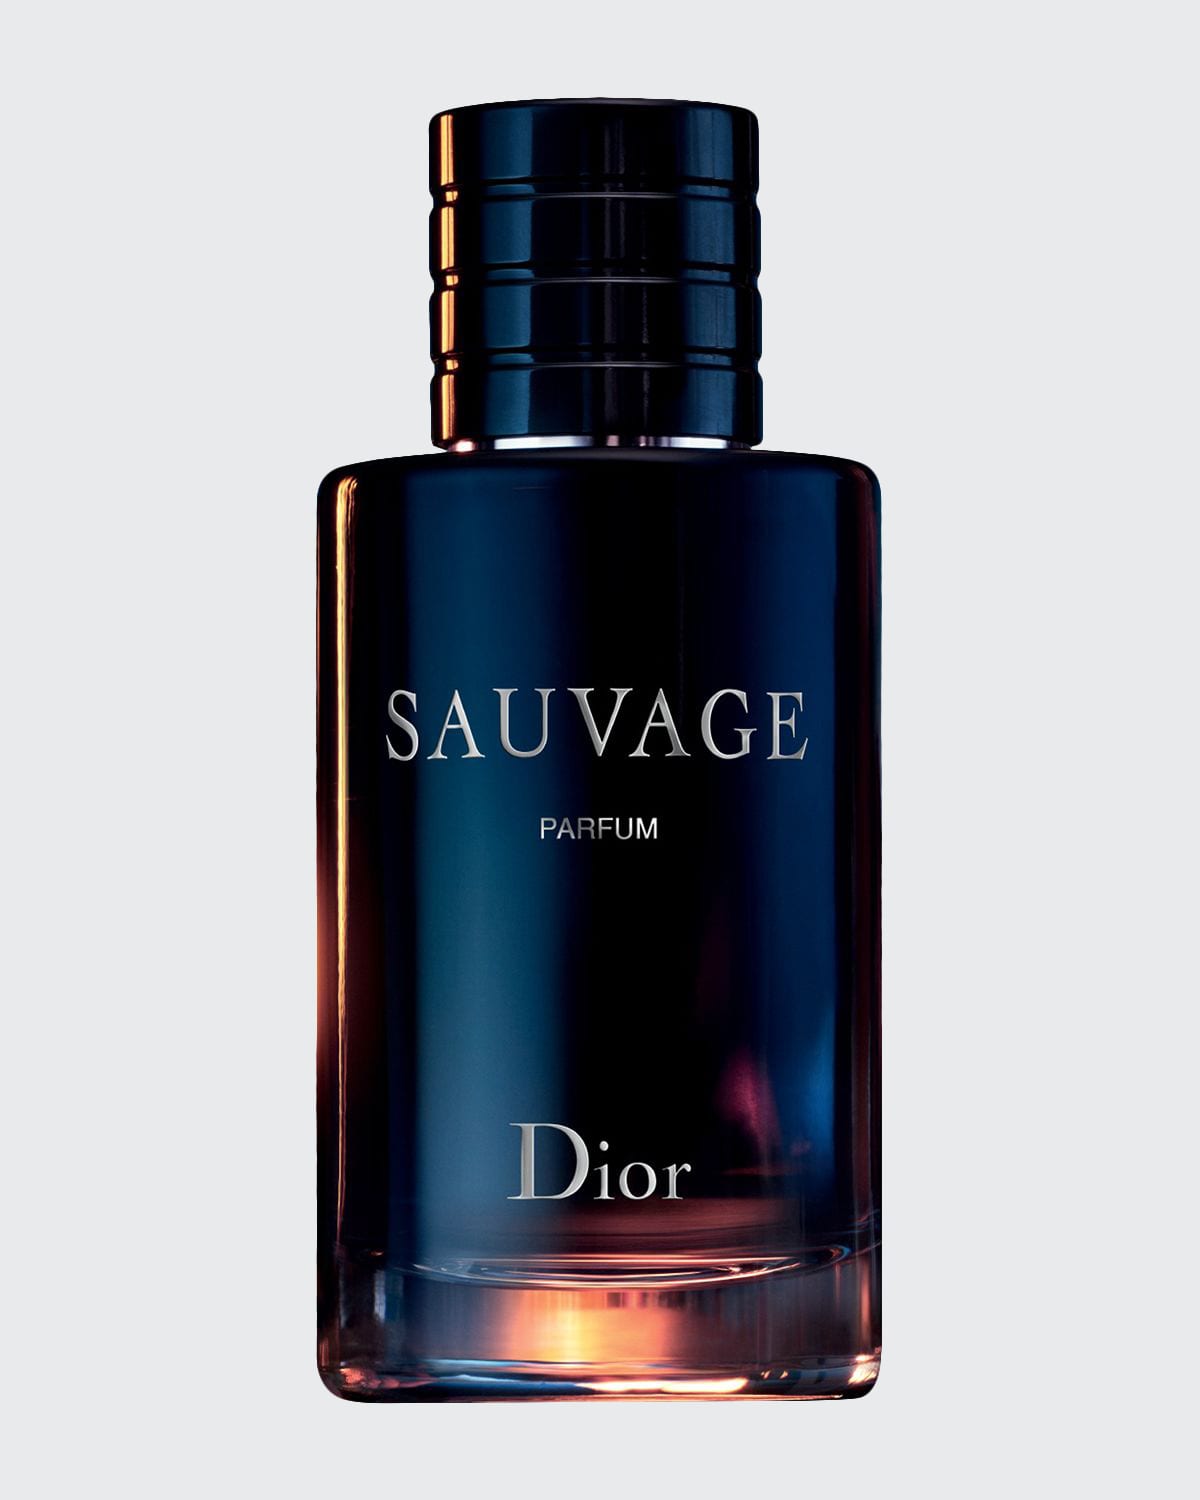 DIOR Sauvage Parfum, 2 oz.